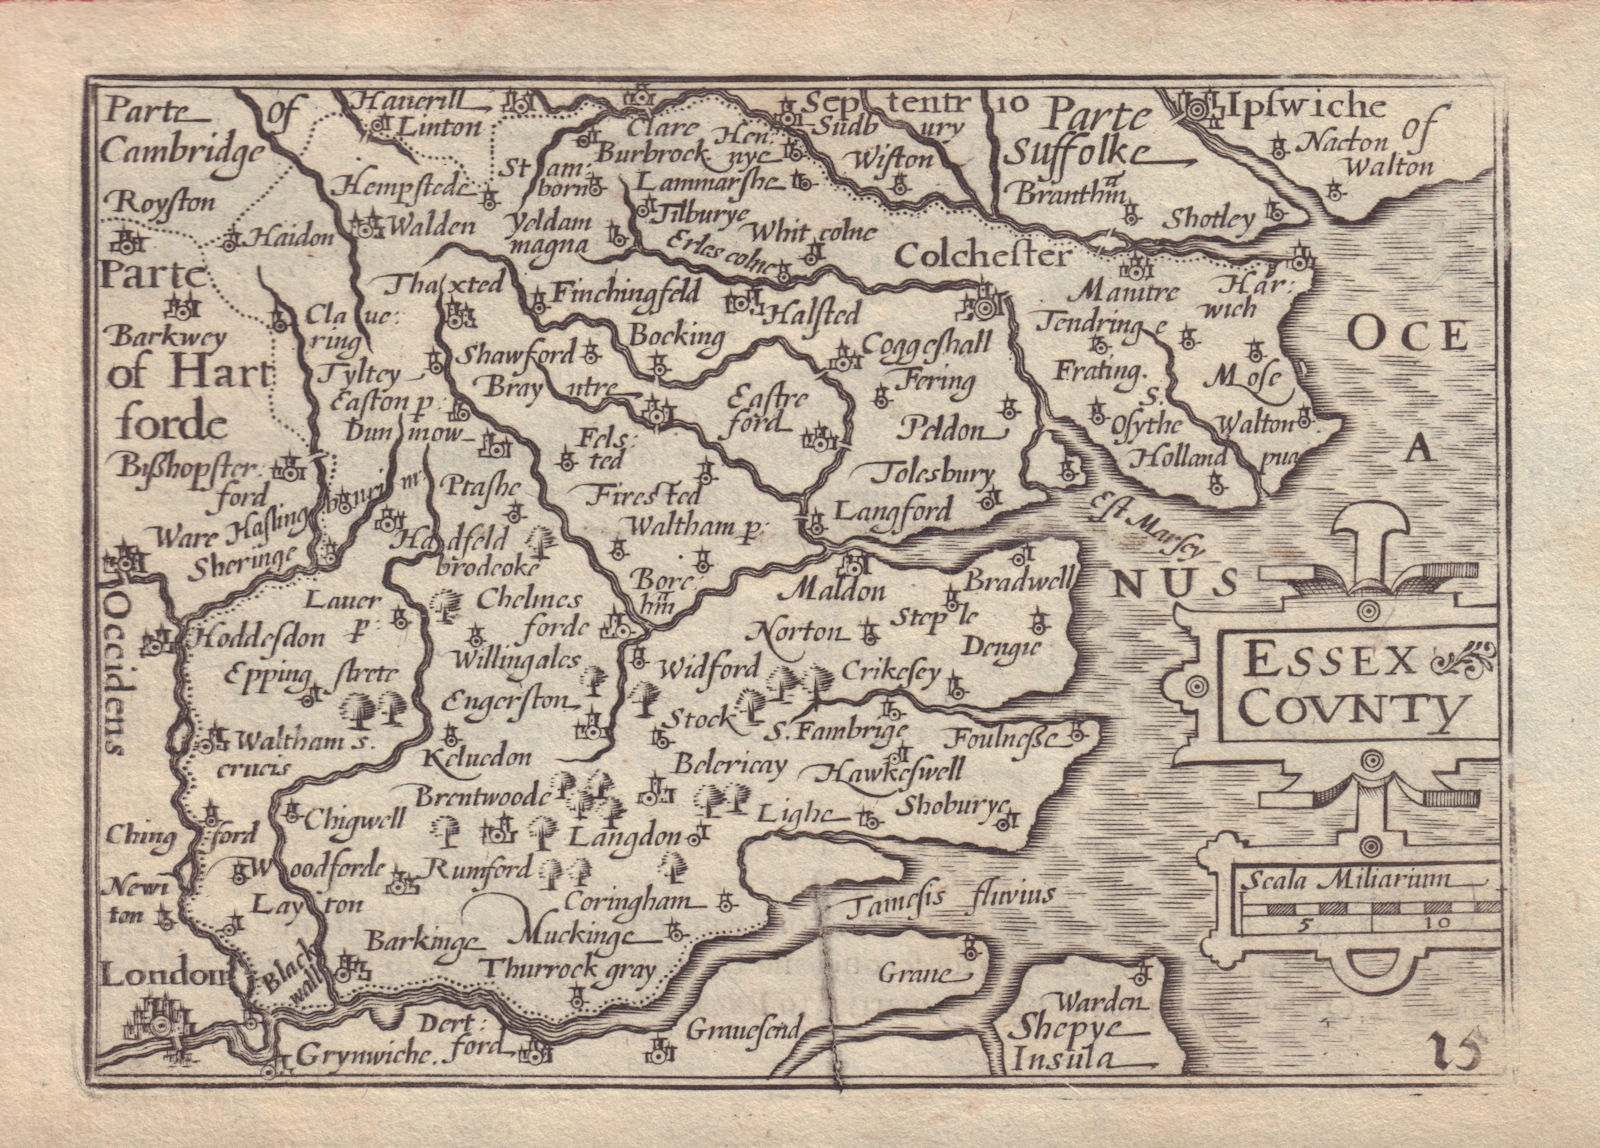 Essex County by van den Keere. "Speed miniature" county map 1632 old